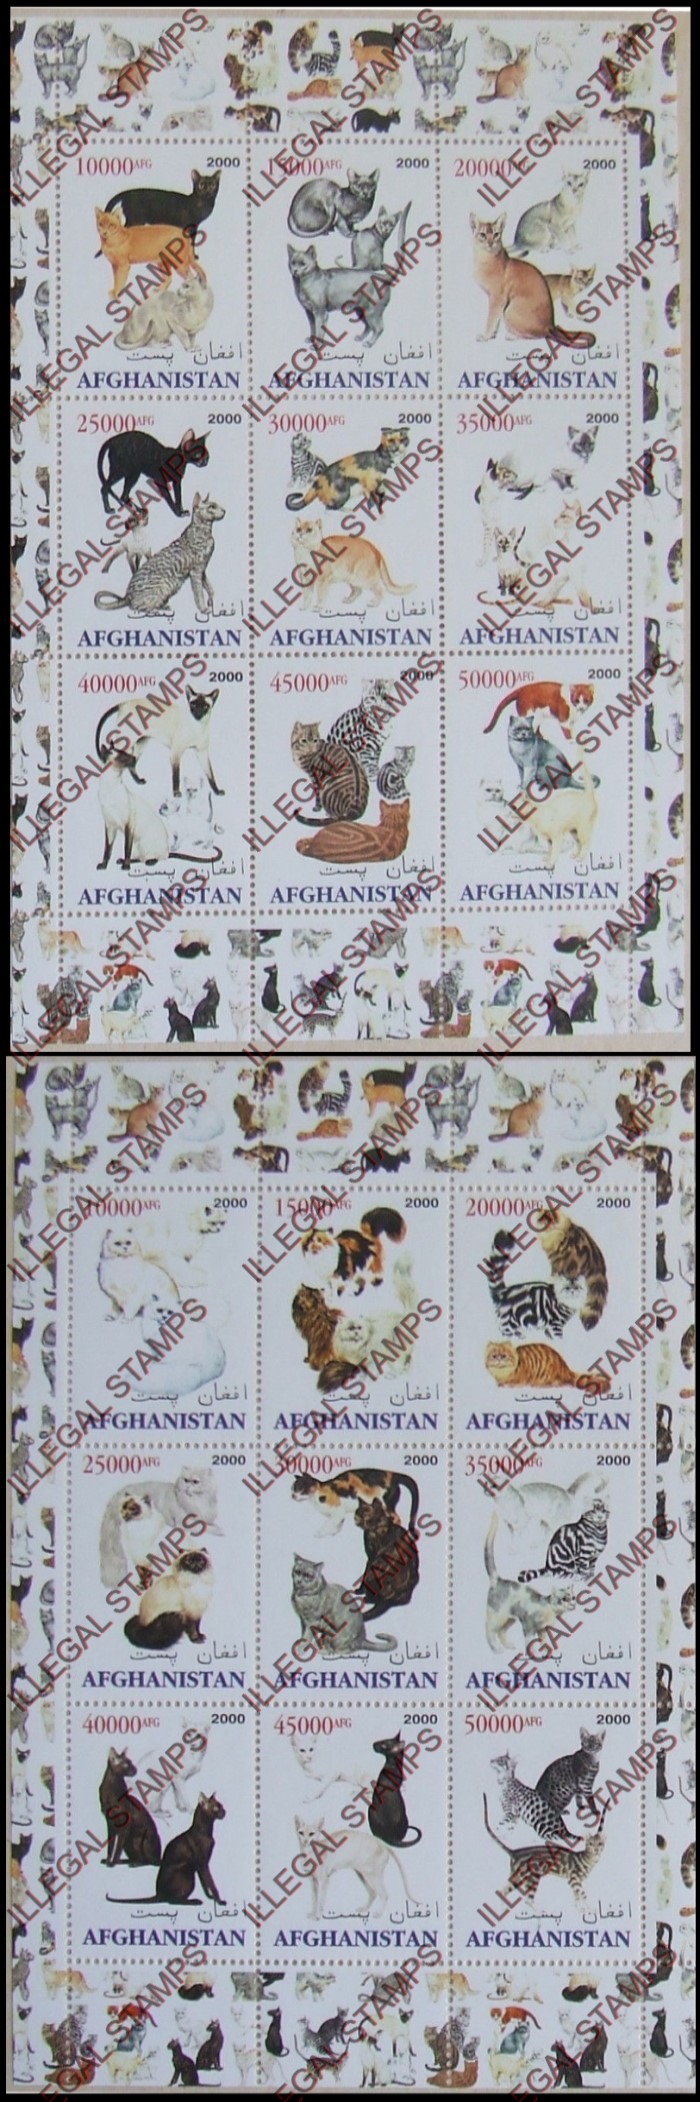 Afghanistan 2000 Cats Illegal Stamp Sheetlets of Nine